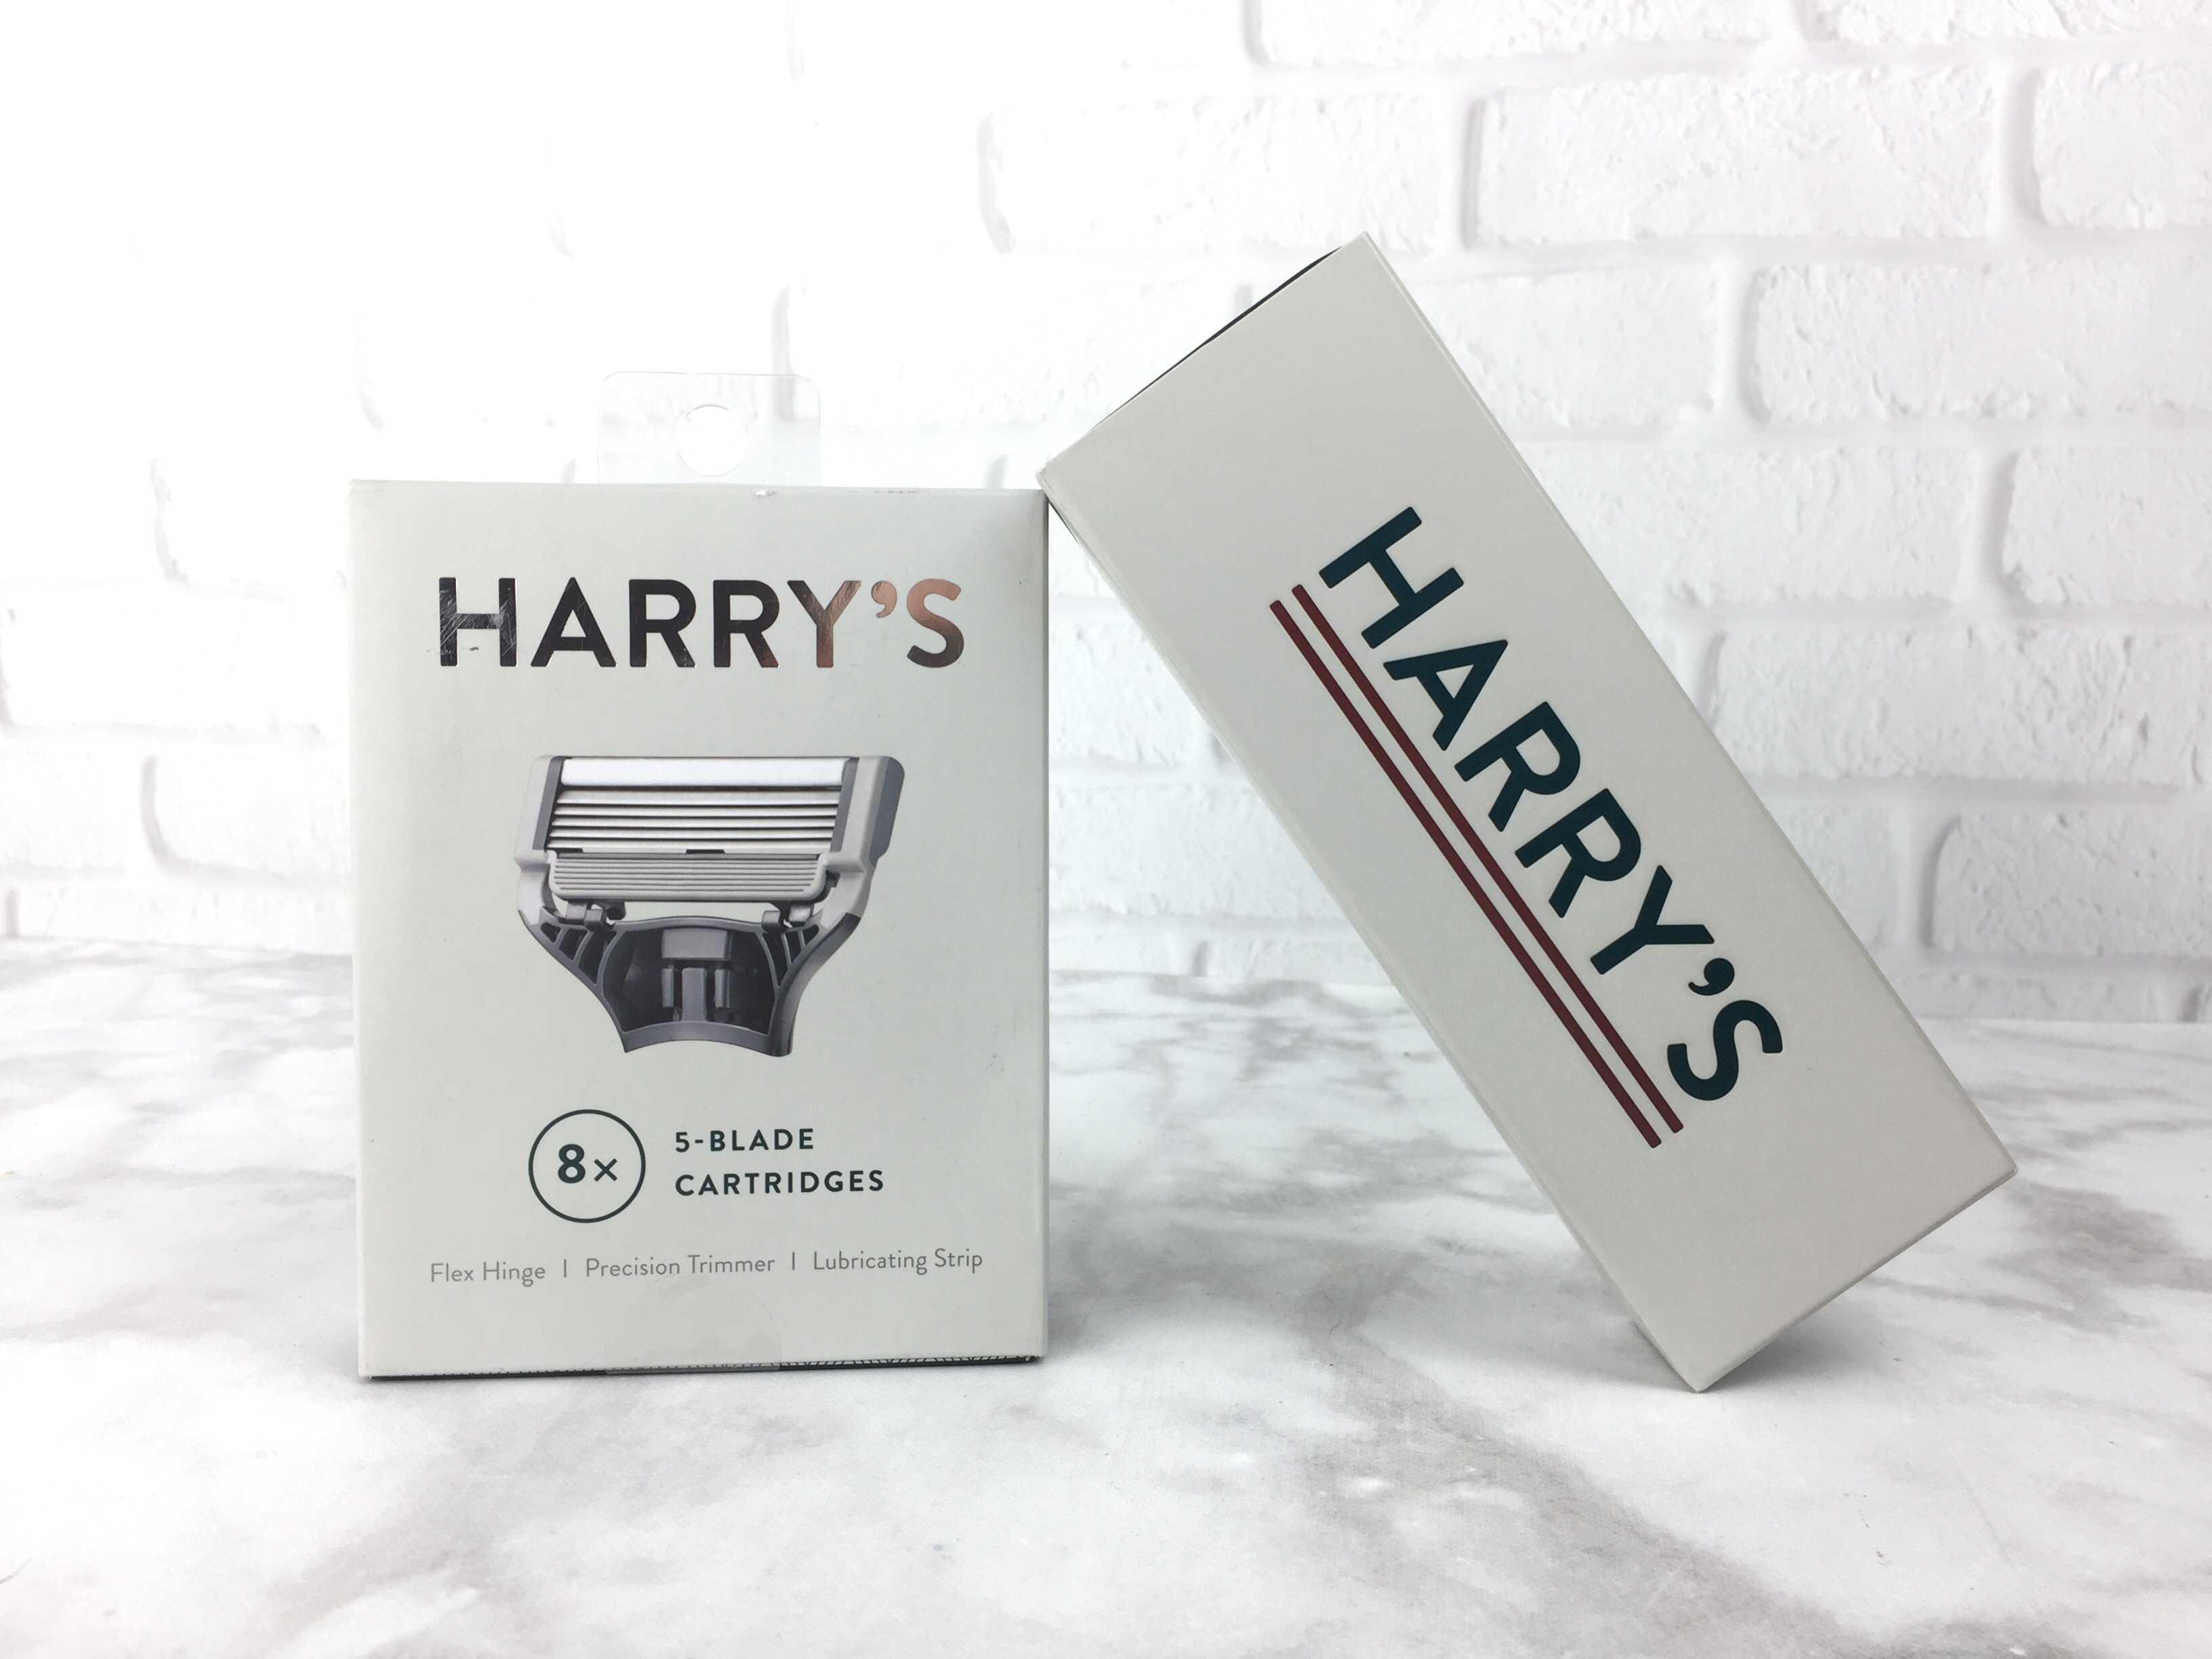 Harry's Cartridges, 5-Blade - 8 cartridges